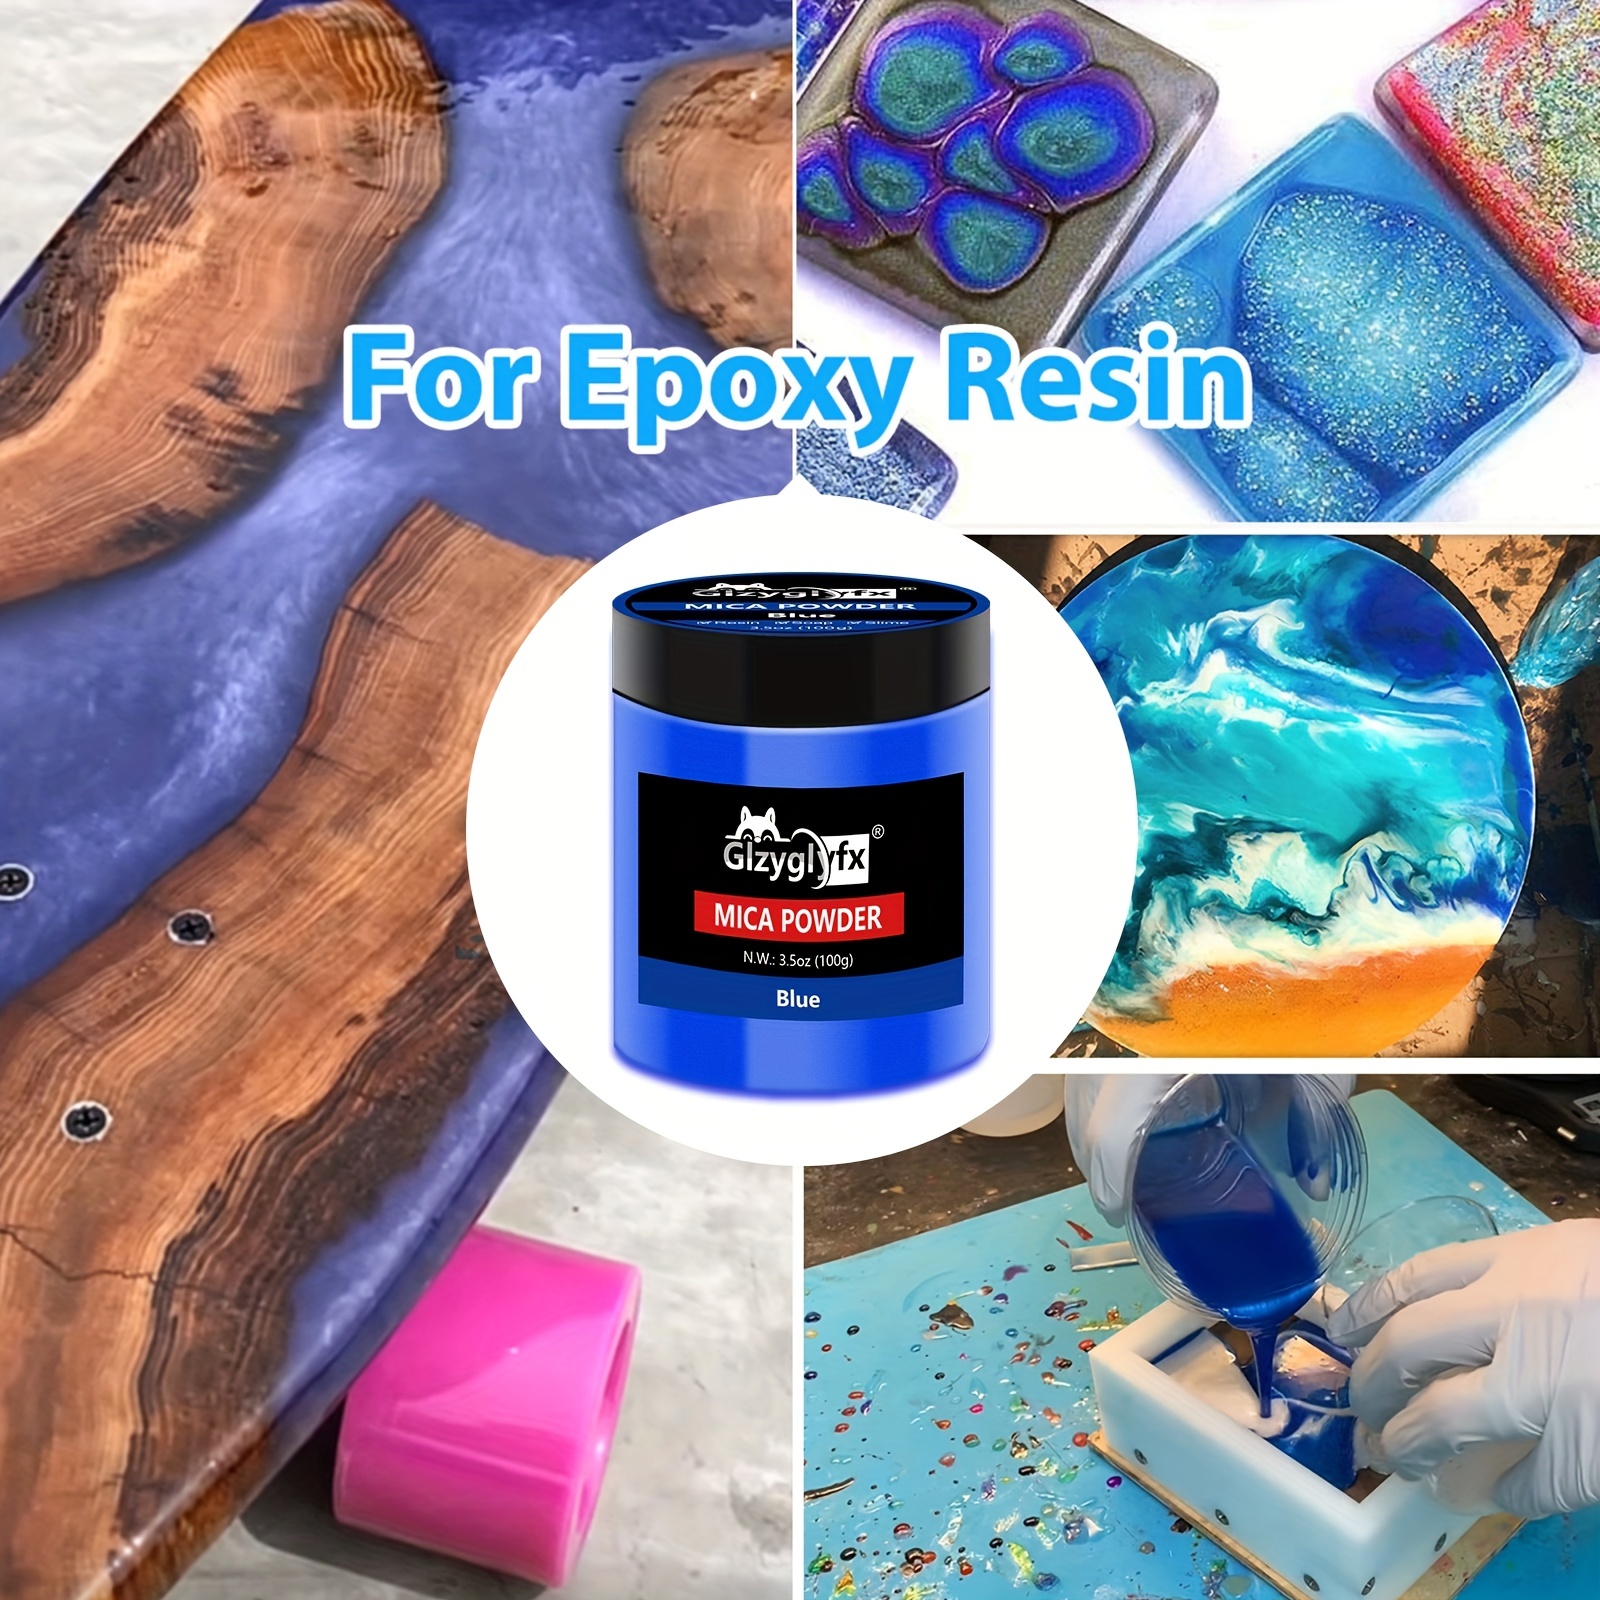 Black Mica Powder 100 Gram Jar For Epoxy Resin, Pigment Powder - Resin Mica  Powder For Candle Making, Resin Powder - Pigment Powder For Epoxy Resin, M